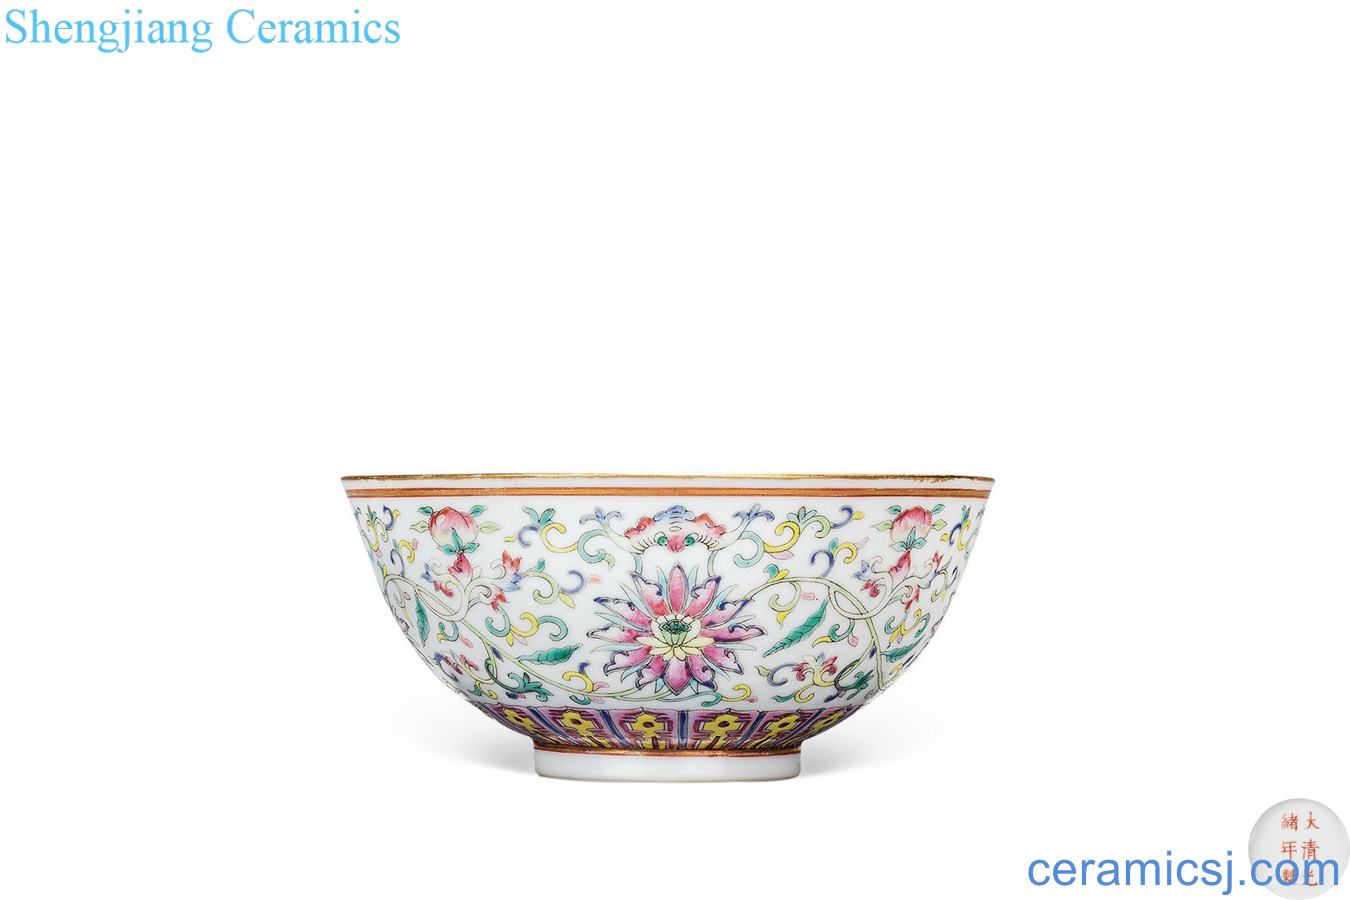 Pastel reign of qing emperor guangxu live flowers green-splashed bowls